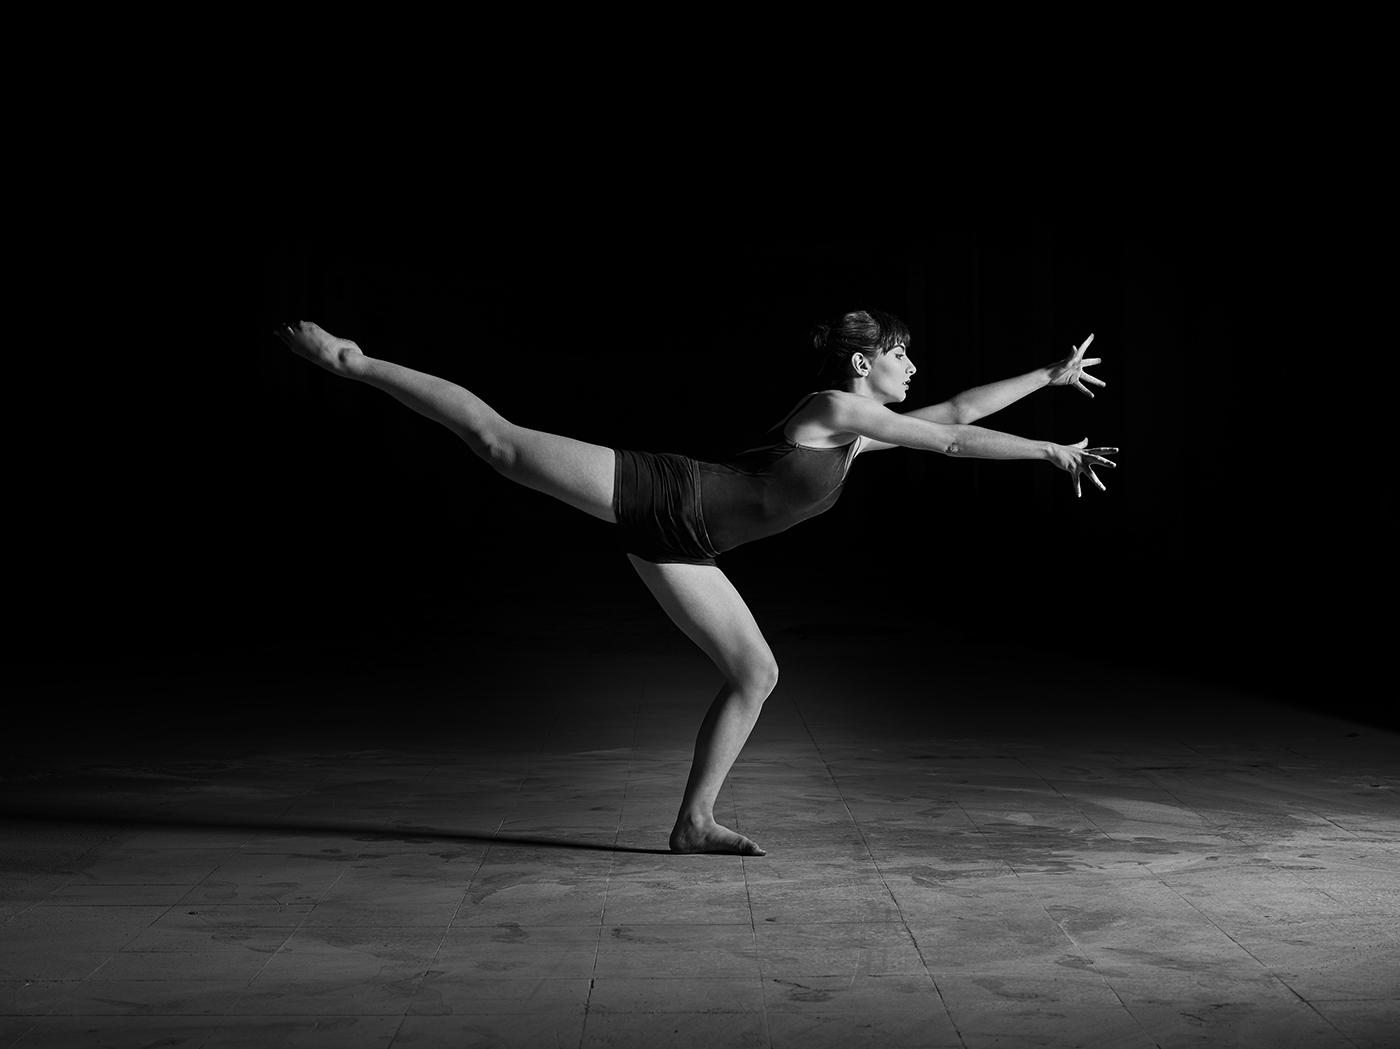 fotografo Fotografia Criativa creative Portraiture ballet ballerina bailarinas photographer portugal photographer